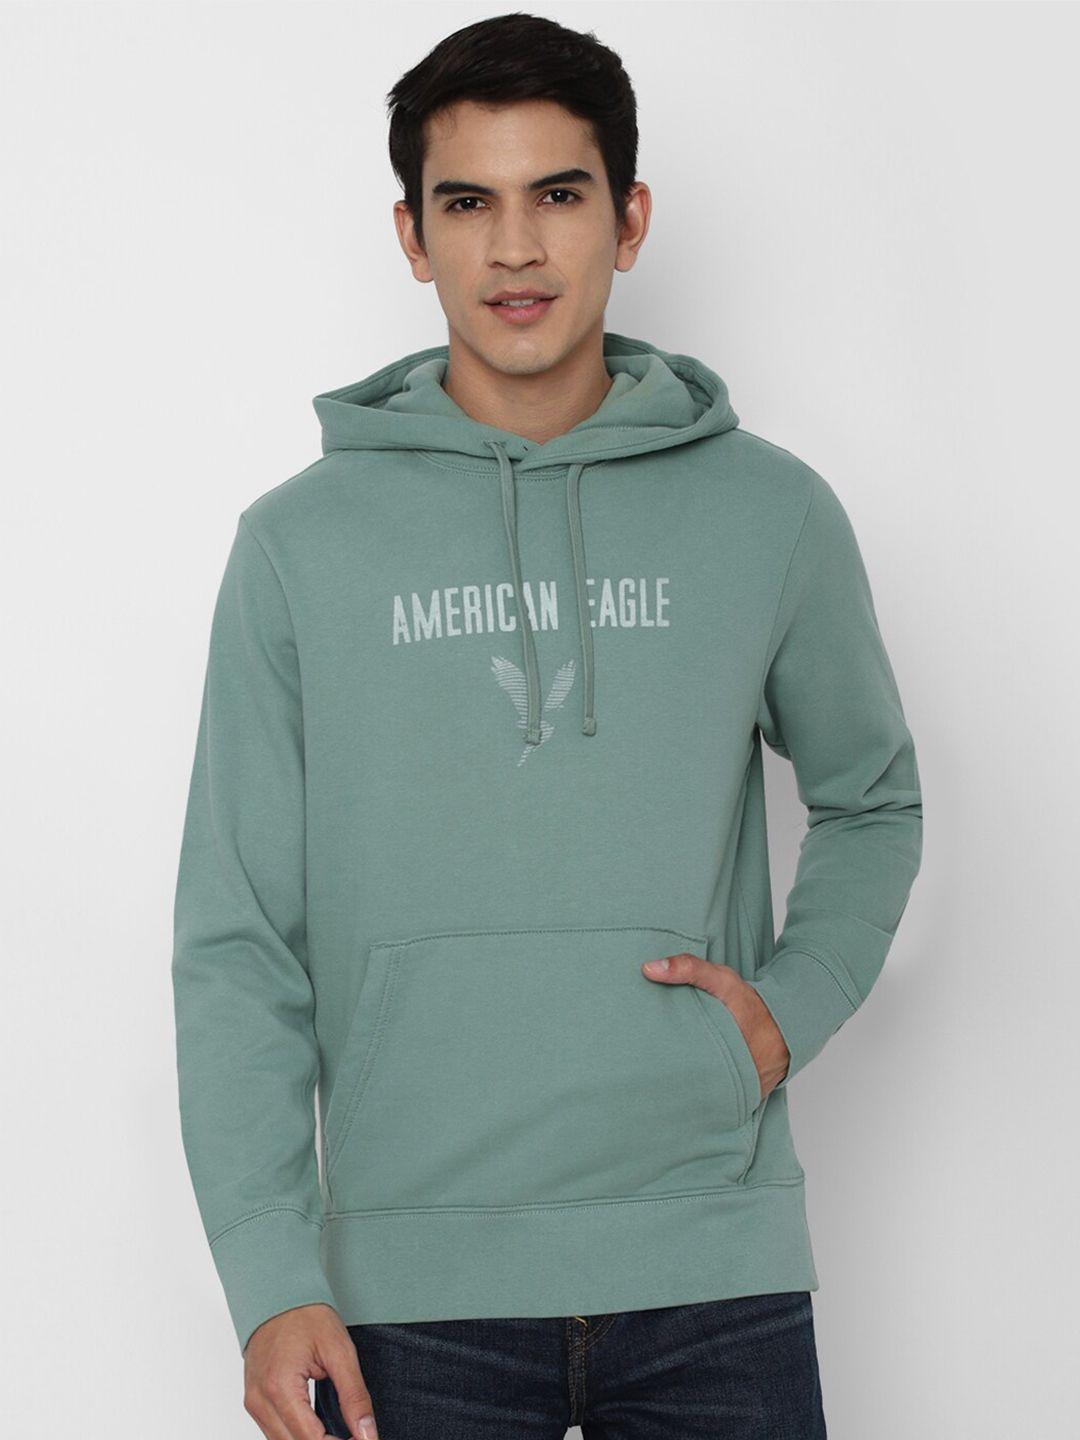 american-eagle-outfitters-men-green-printed-hooded-sweatshirt